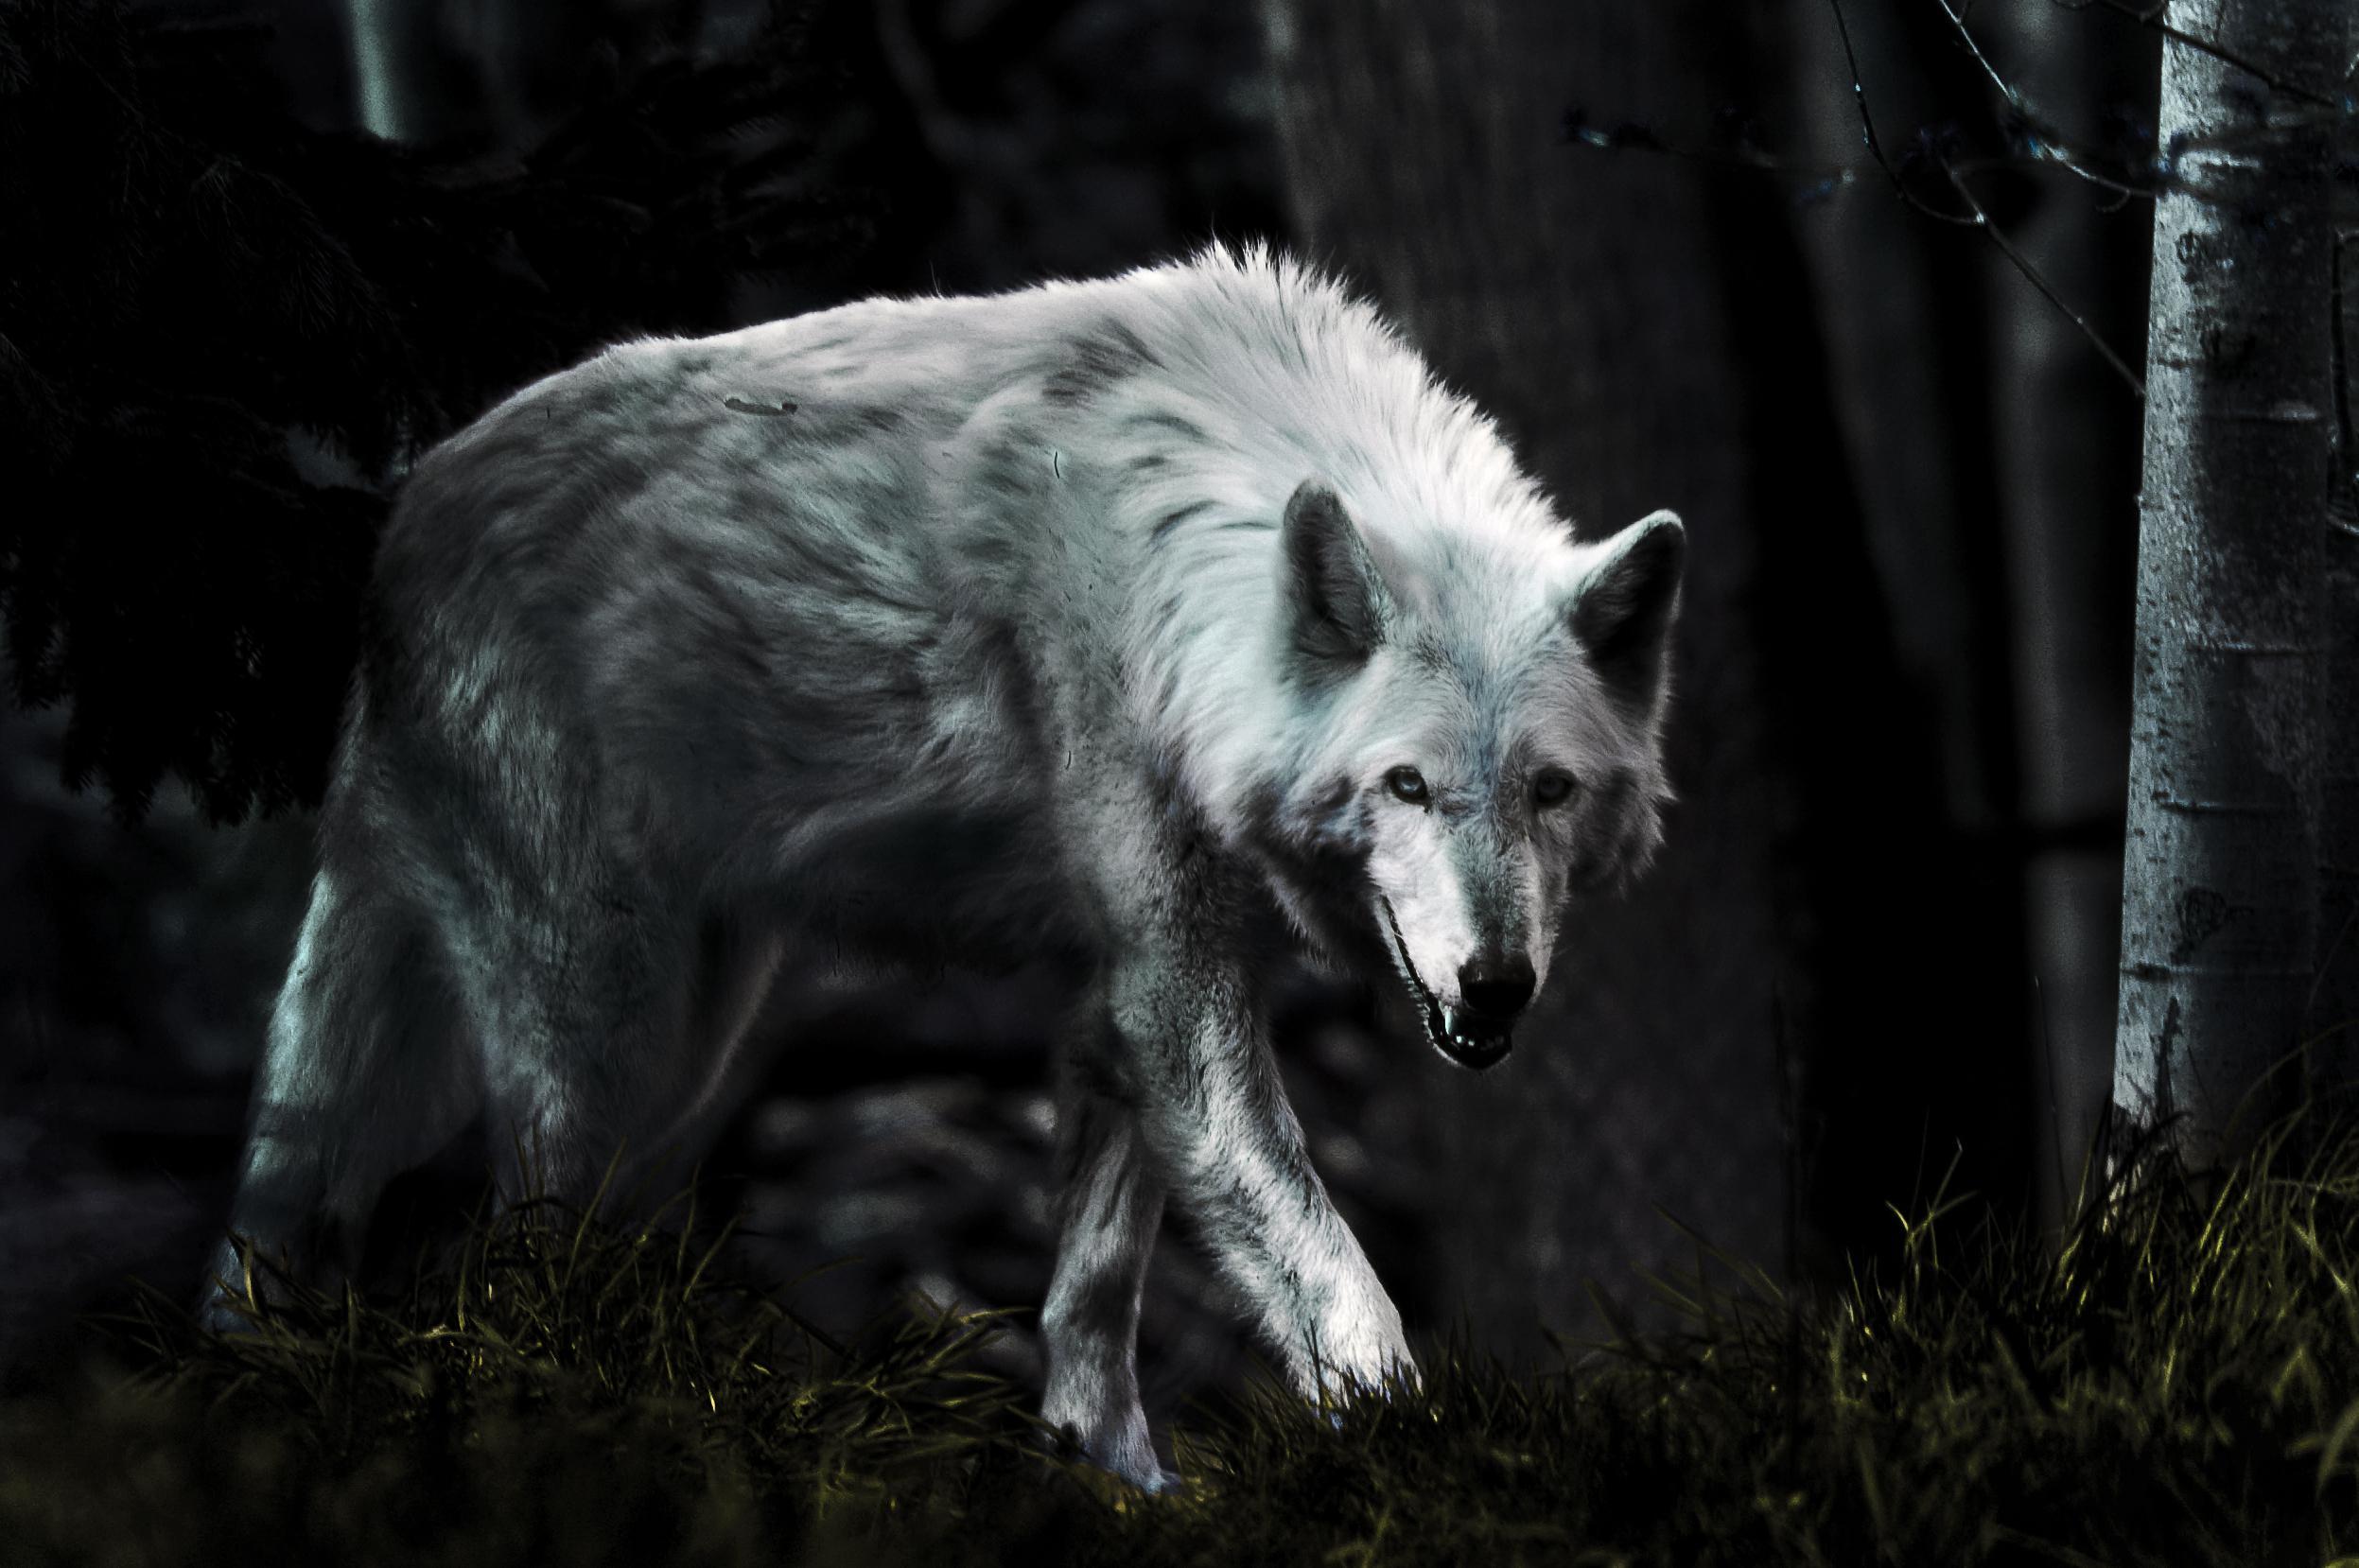 White Wolf 4K Ultra HD Background Wallpaper.com